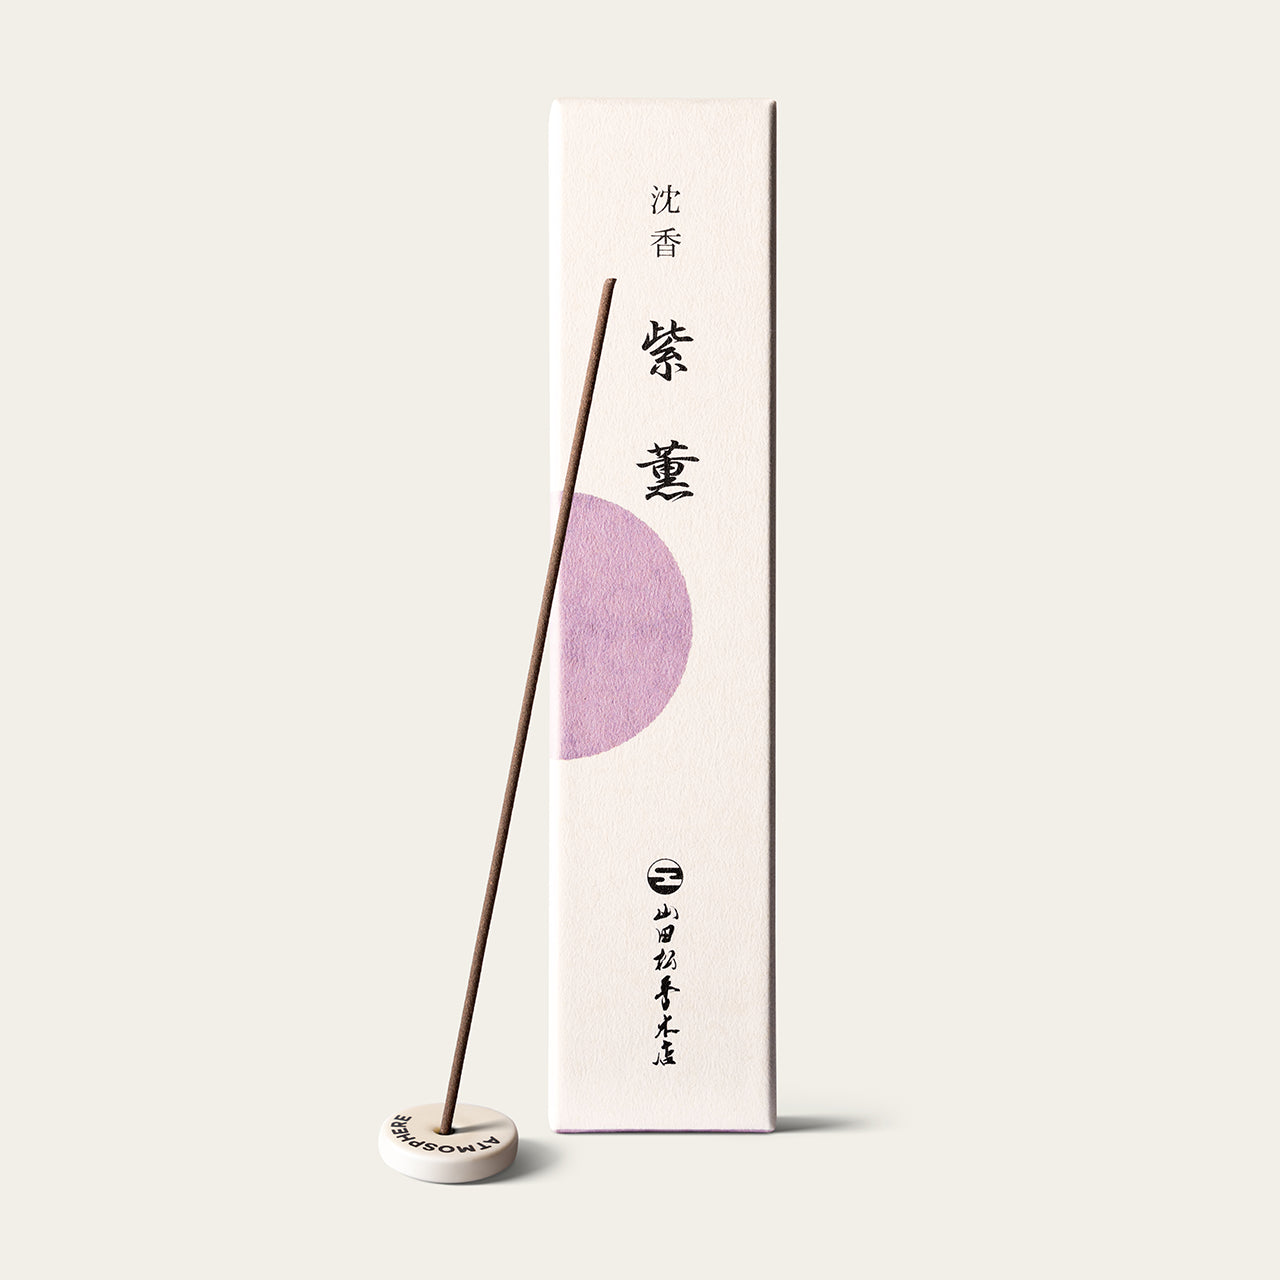 Yamadamatsu Premium Purple Incense Shikun Japanese incense sticks (75 sticks) with Atmosphere ceramic incense holder